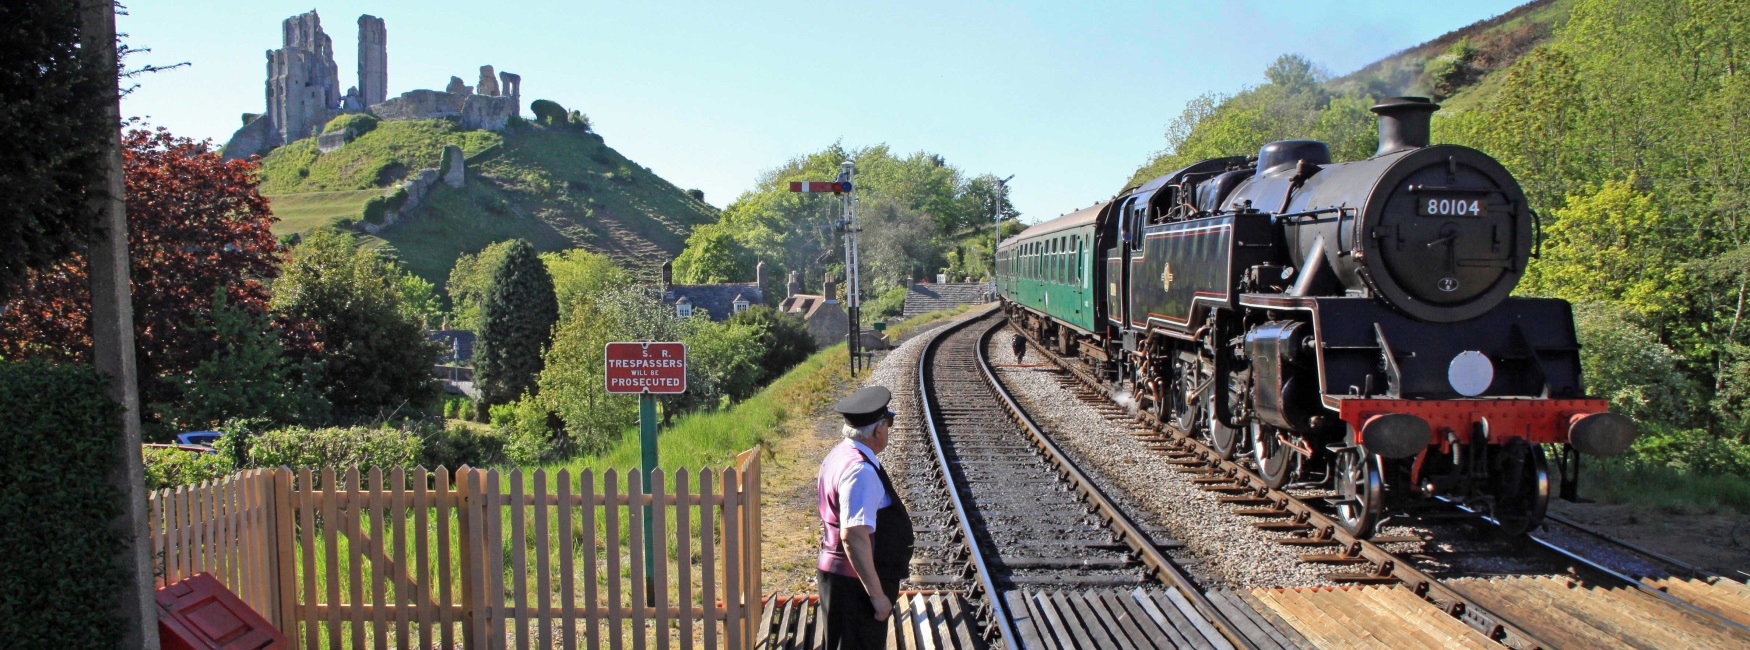 Swanage Railway Dorset.jpg